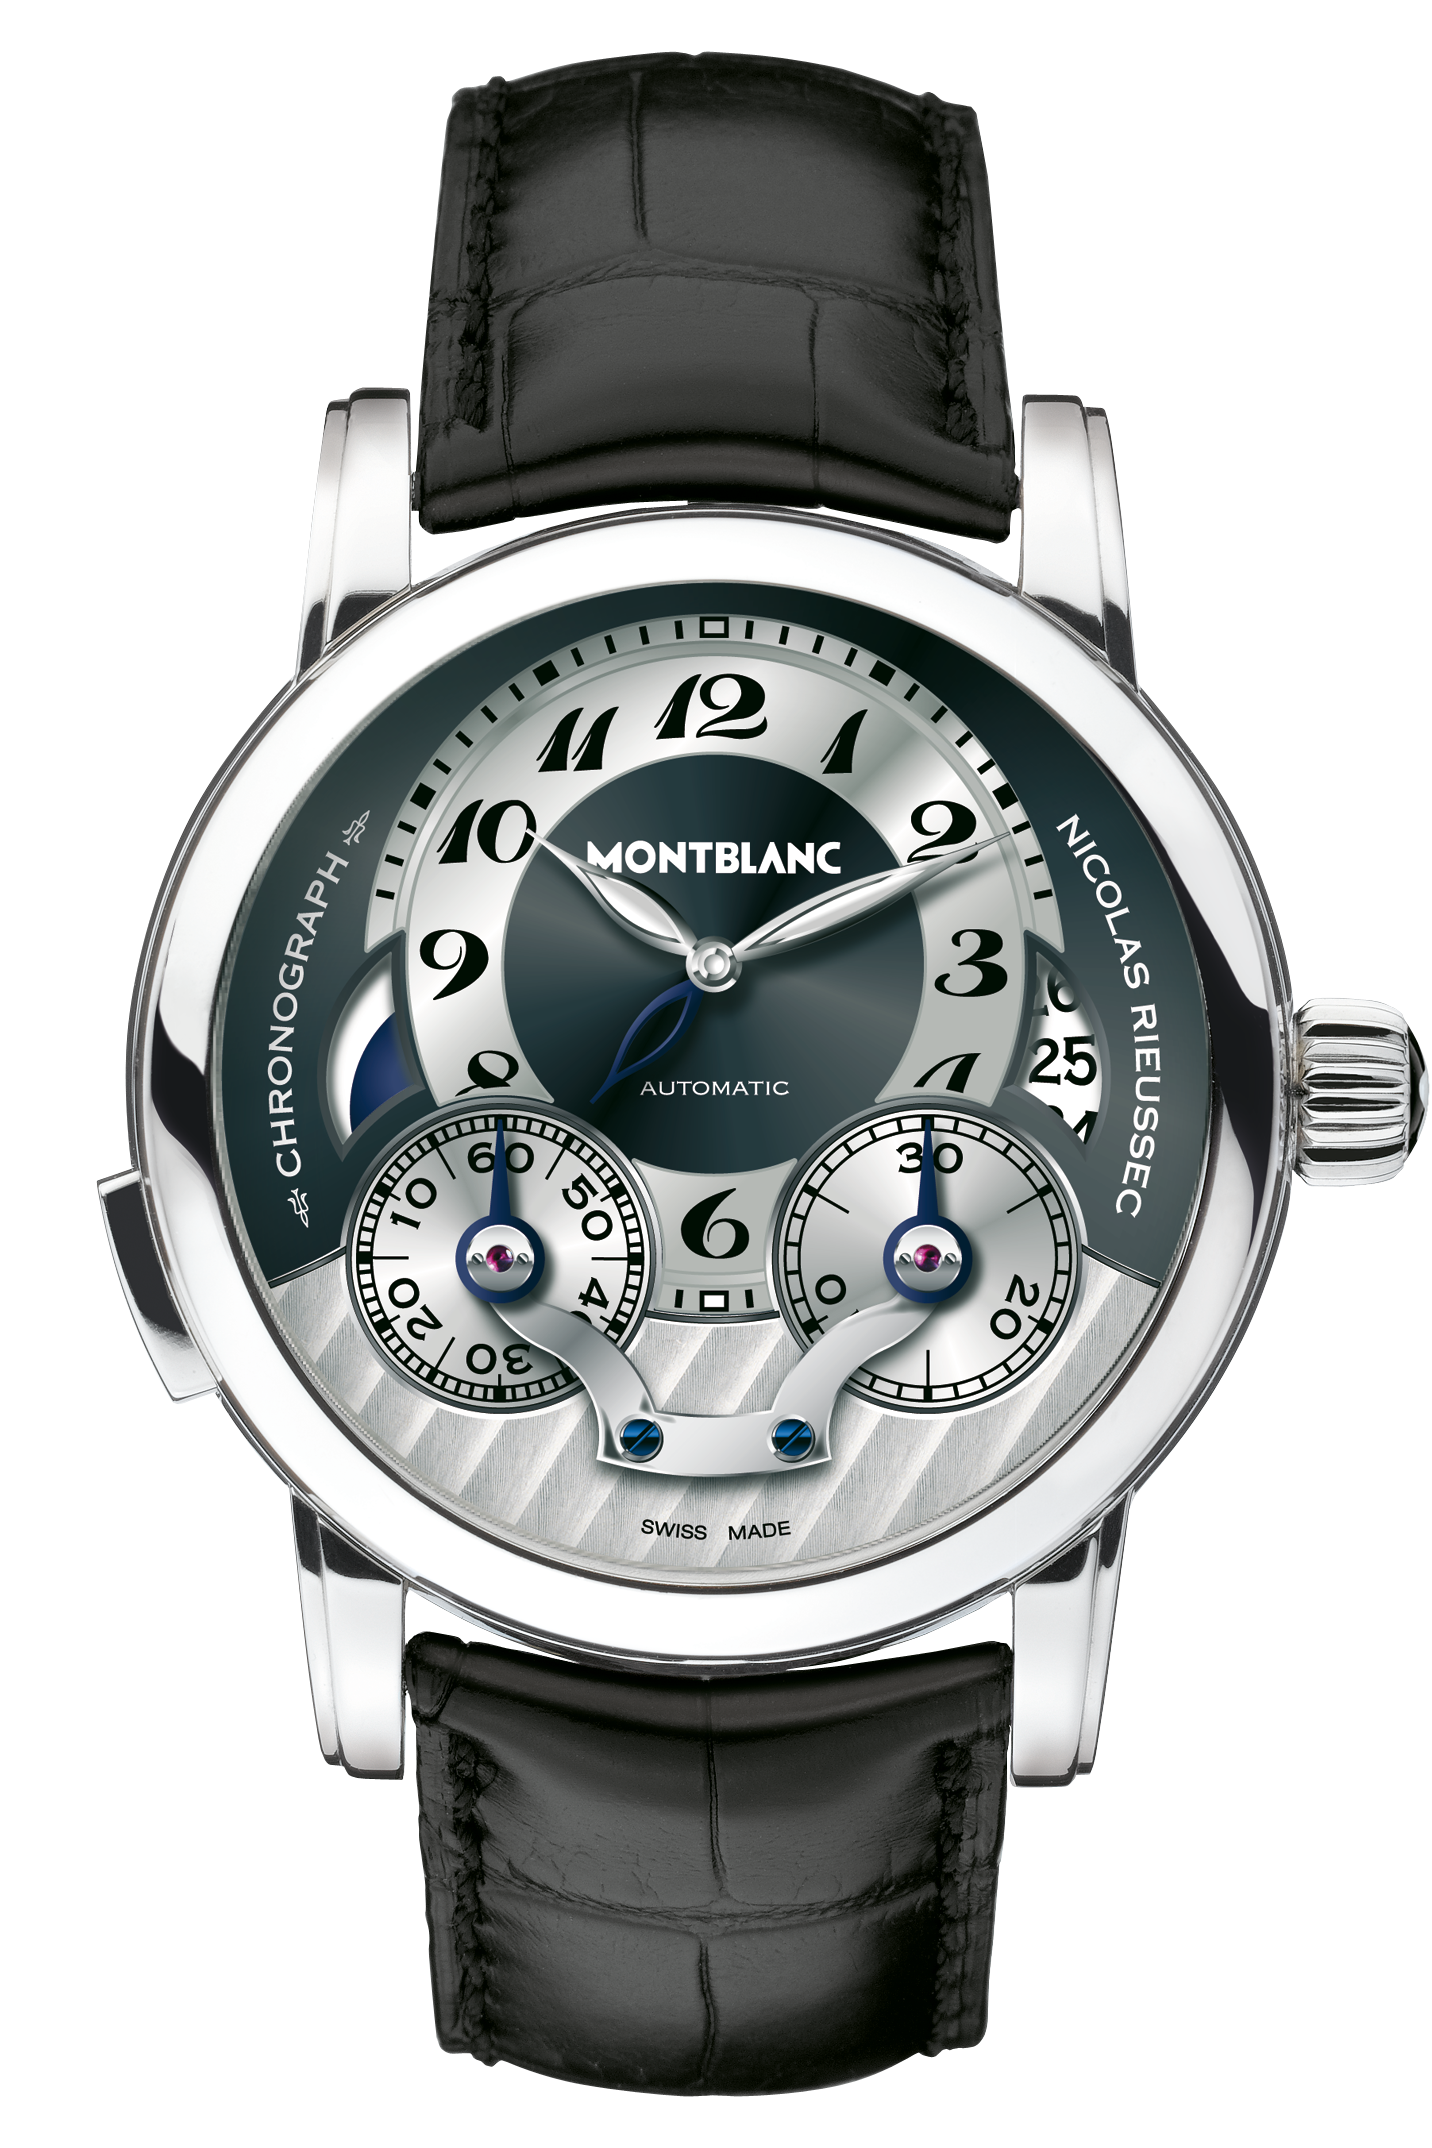 Монблан часы мужские. Montblanc Nicolas Rieussec Chronograph. Часы Montblanc Automatic. Montblanc r200 Movement. Часы мужские Montblanc Tourbillon Automatic.